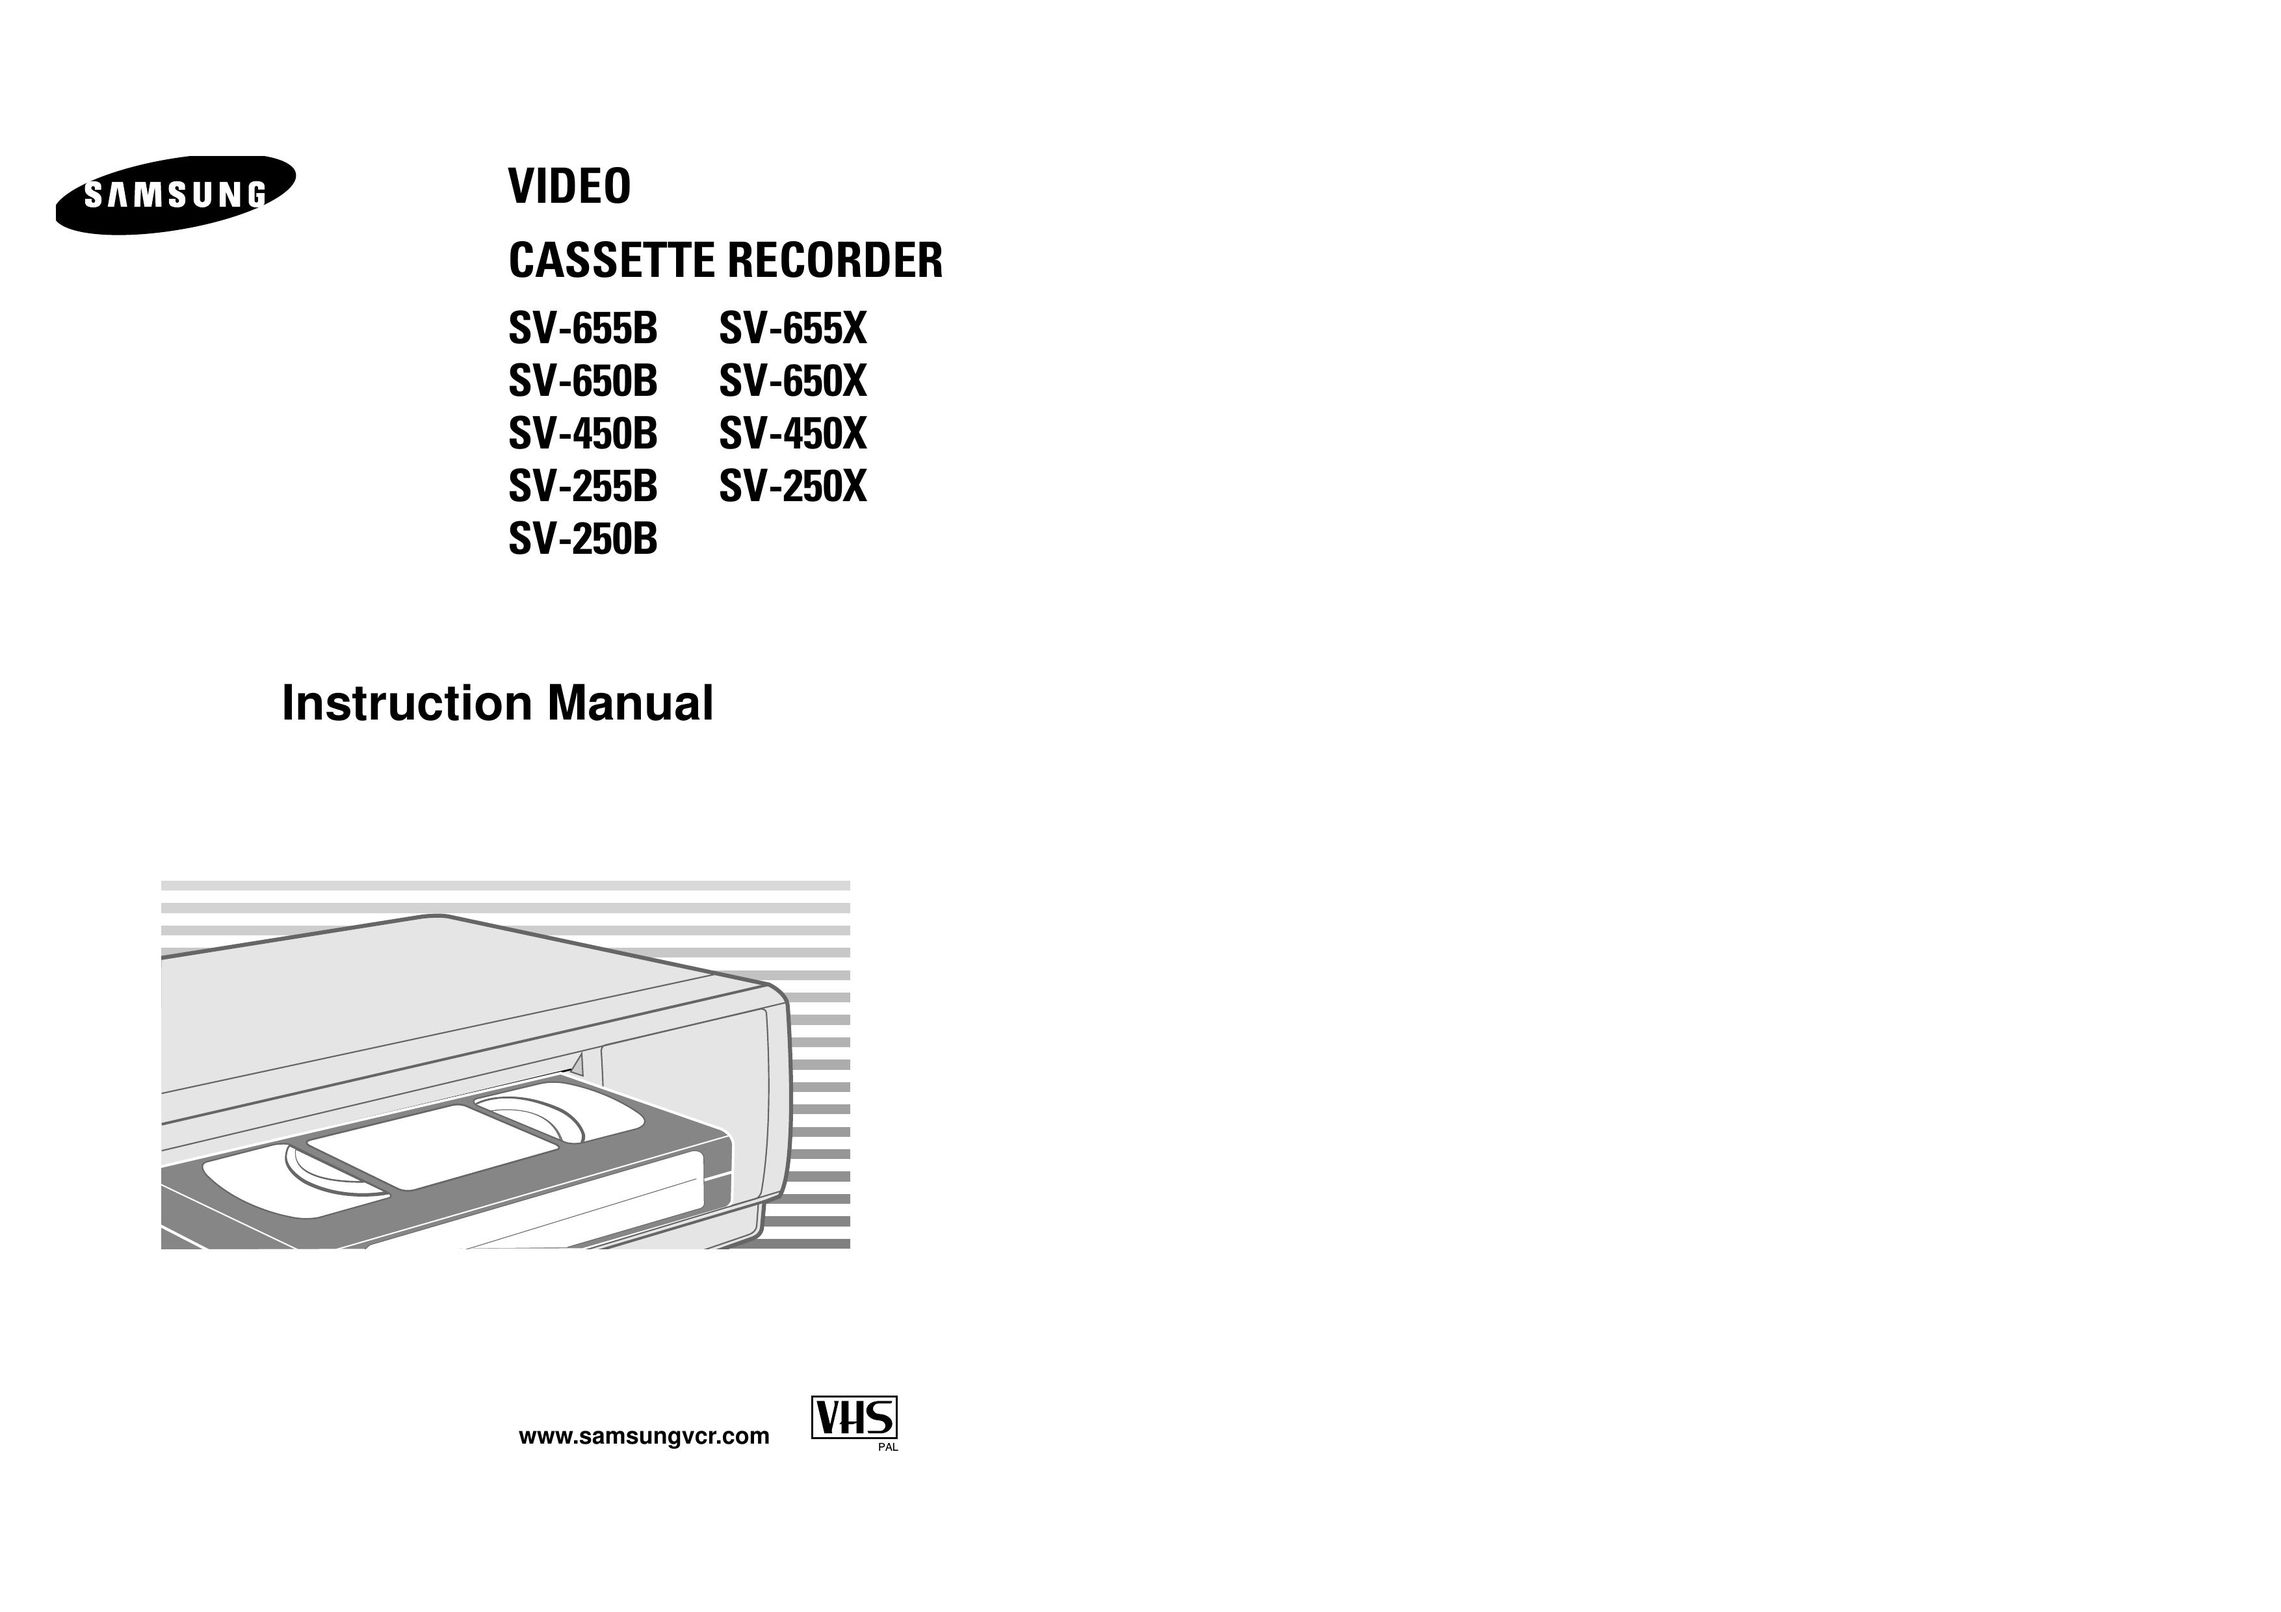 Samsung SV-650X VCR User Manual